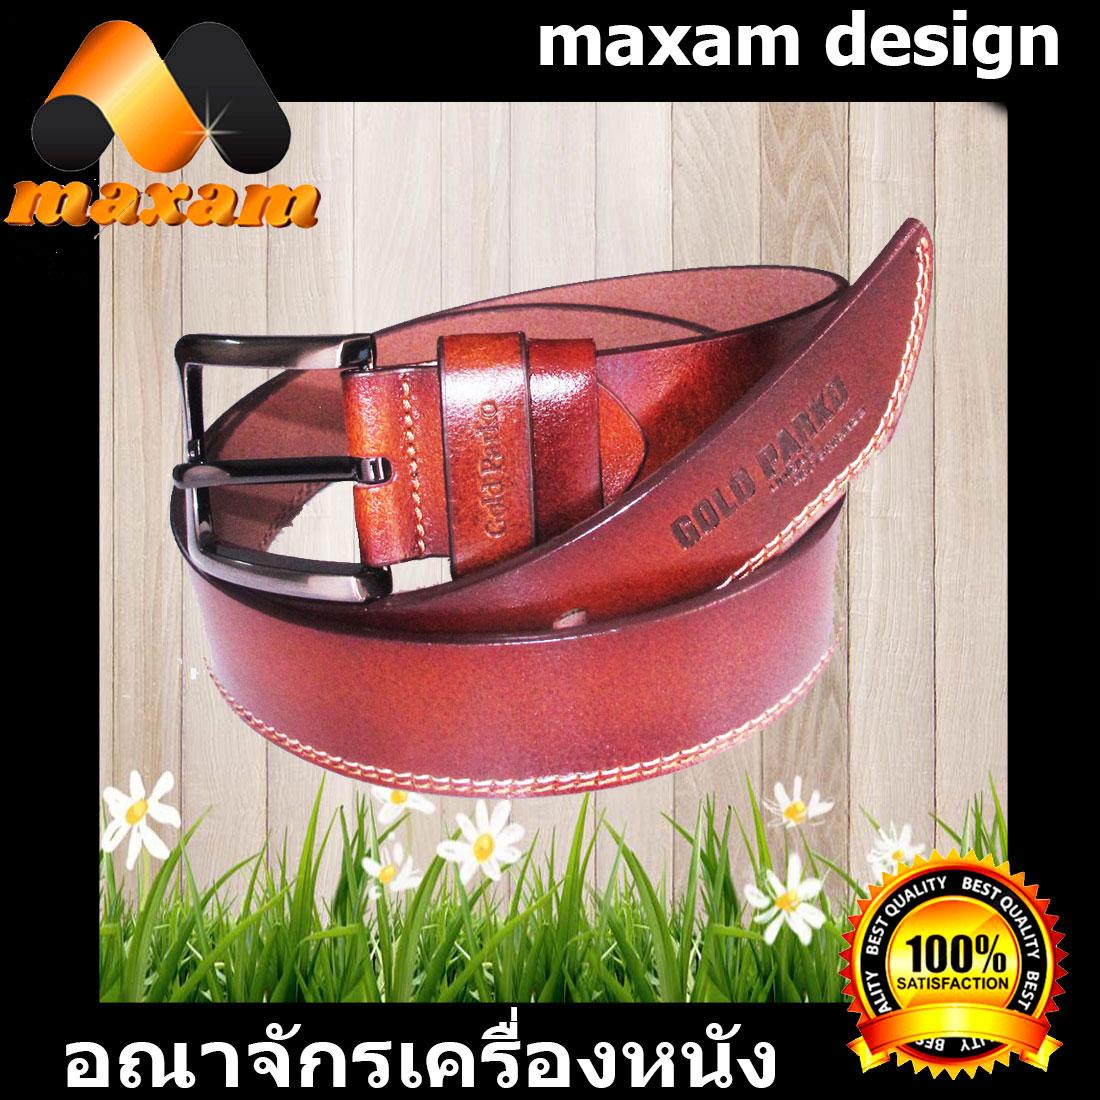 maxam design  Belt And Buckle By Gold Parko Leather เข็มขัด เข็มขัดหนังแท้ เข็มขัด แบบปลายเฉียง และ ปลายตัก ทำจากหนังวัว ไม่แข็งกระด้าน มีอักษร Gold Parko Leather สวยเทห์ สุดใจ maxam design maxam design